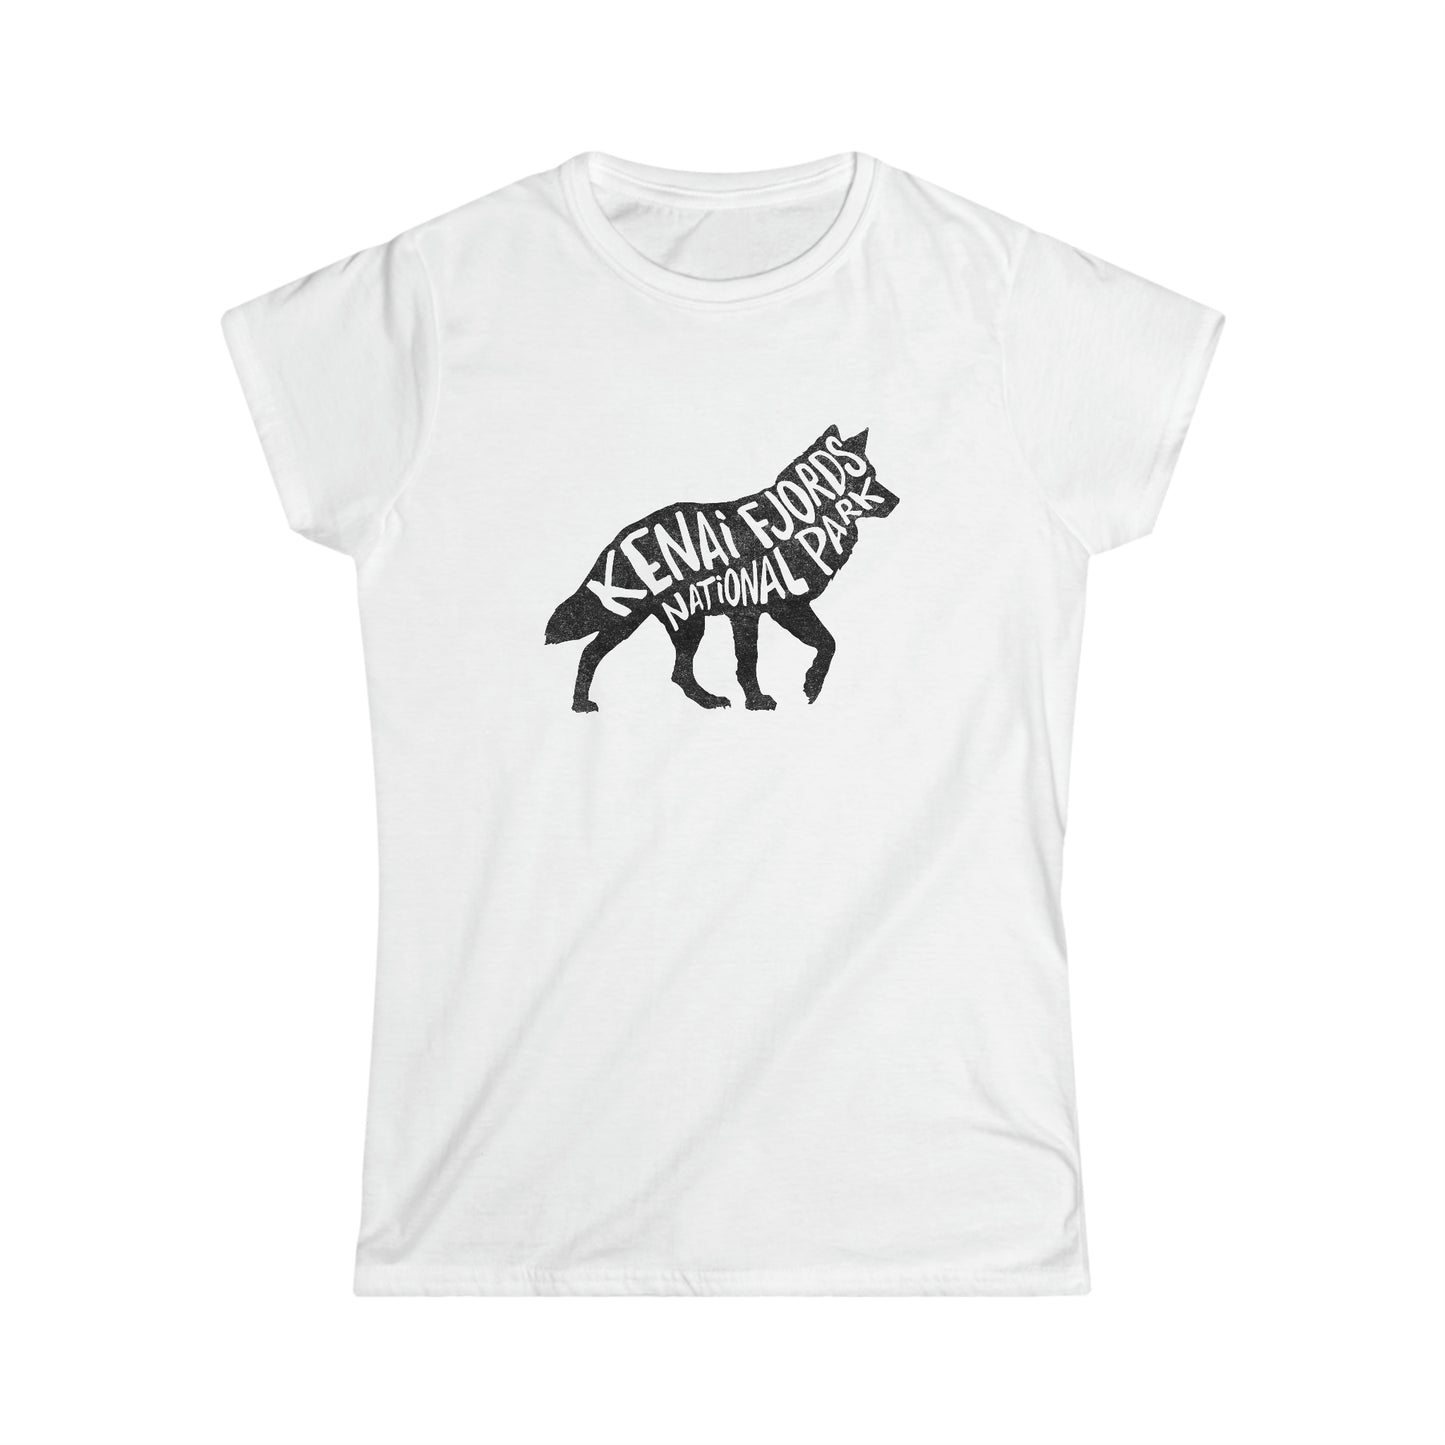 Kenai Fjords National Park Women's T-Shirt - Wolf